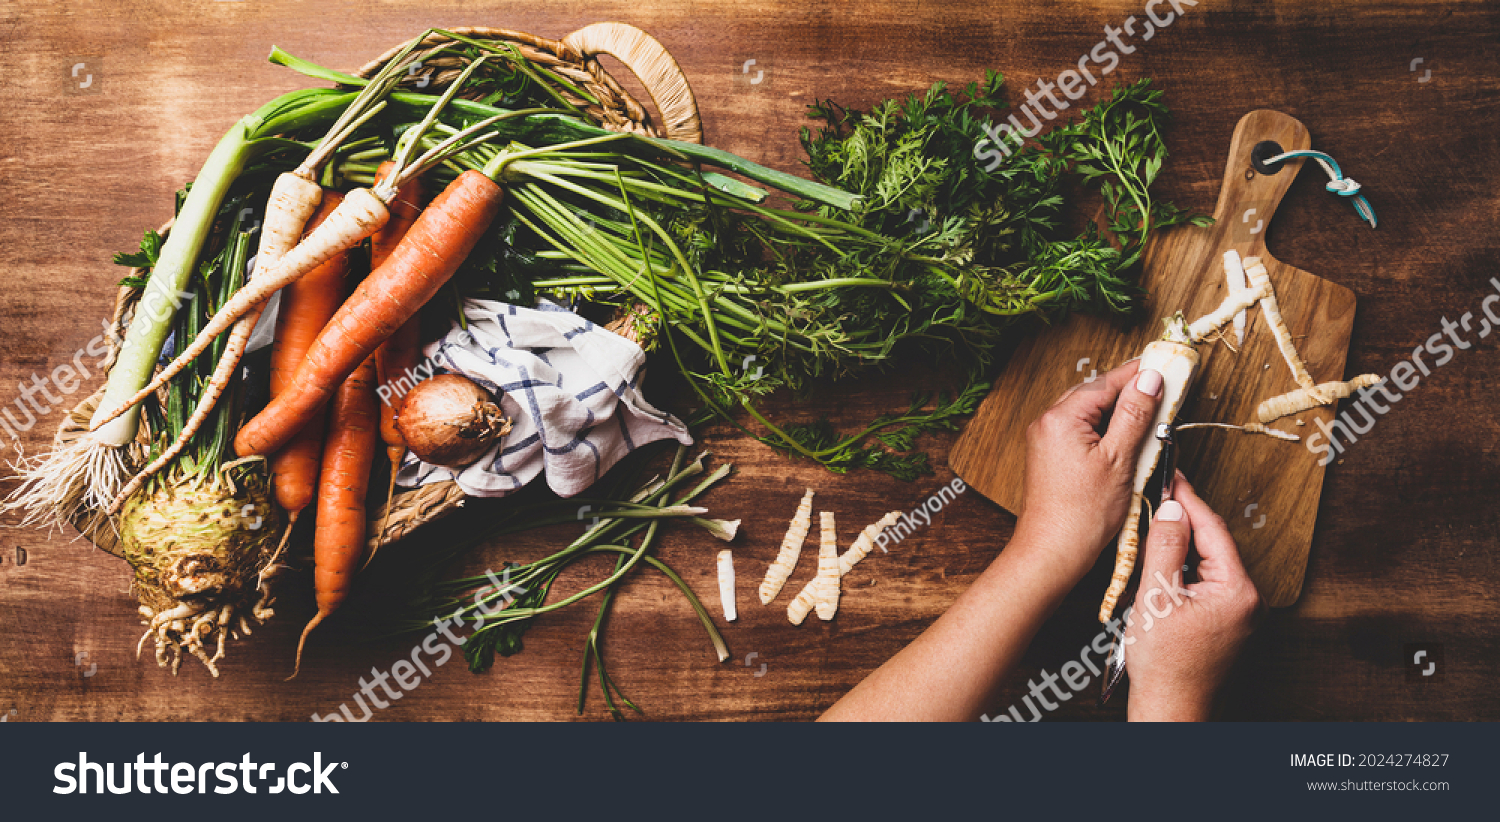 Cooking - chef's hands preparing fresh raw root vegetables (carrot, parsnip, celeriac, leek). Rustic kitchen scenery - wooden worktop captured from above (top view, flat lay).  #2024274827